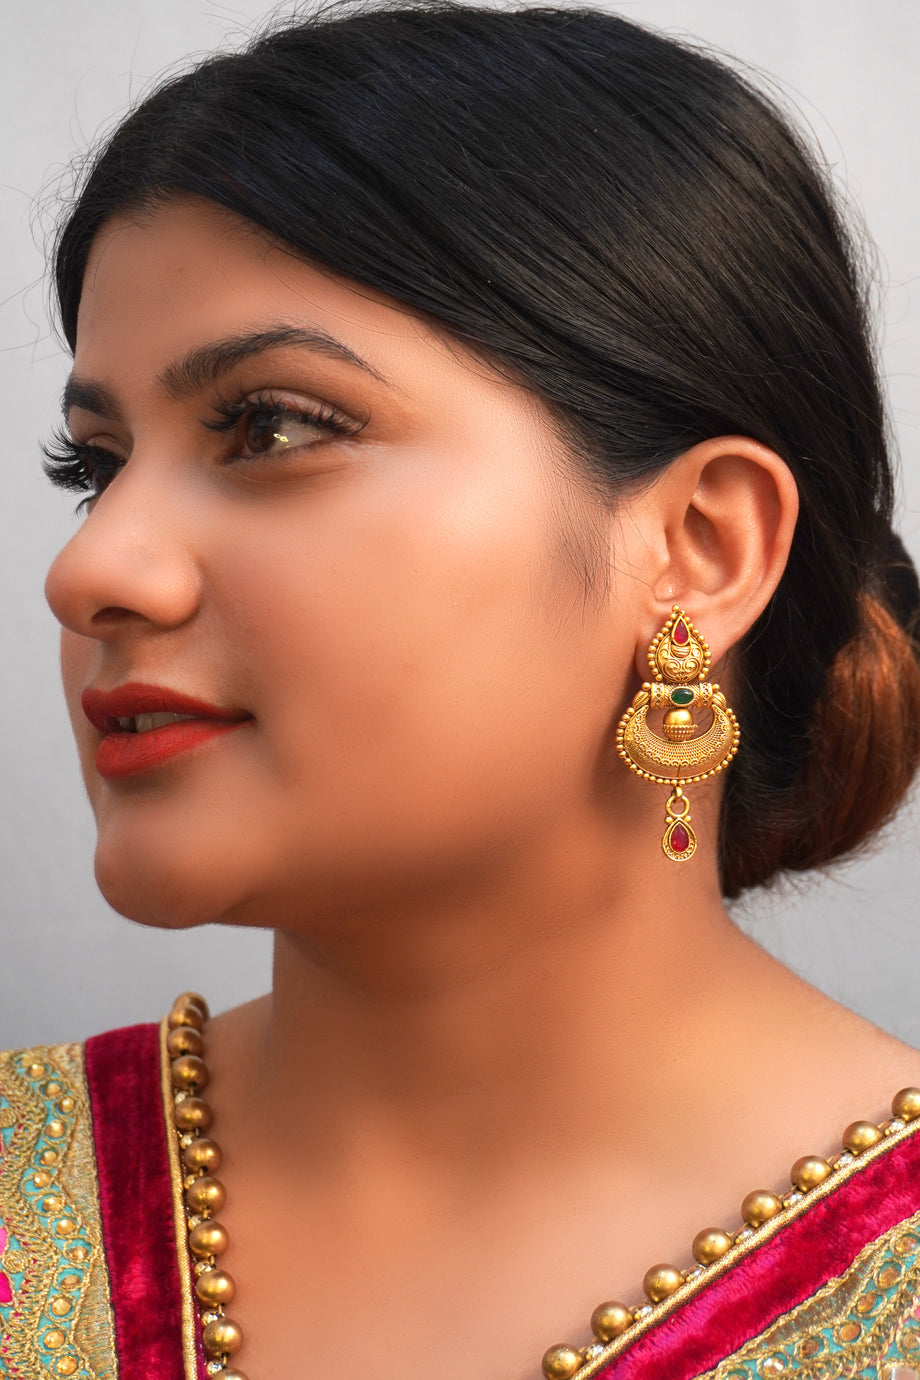 Buy 24k Gold Earrings Online In India - Etsy India